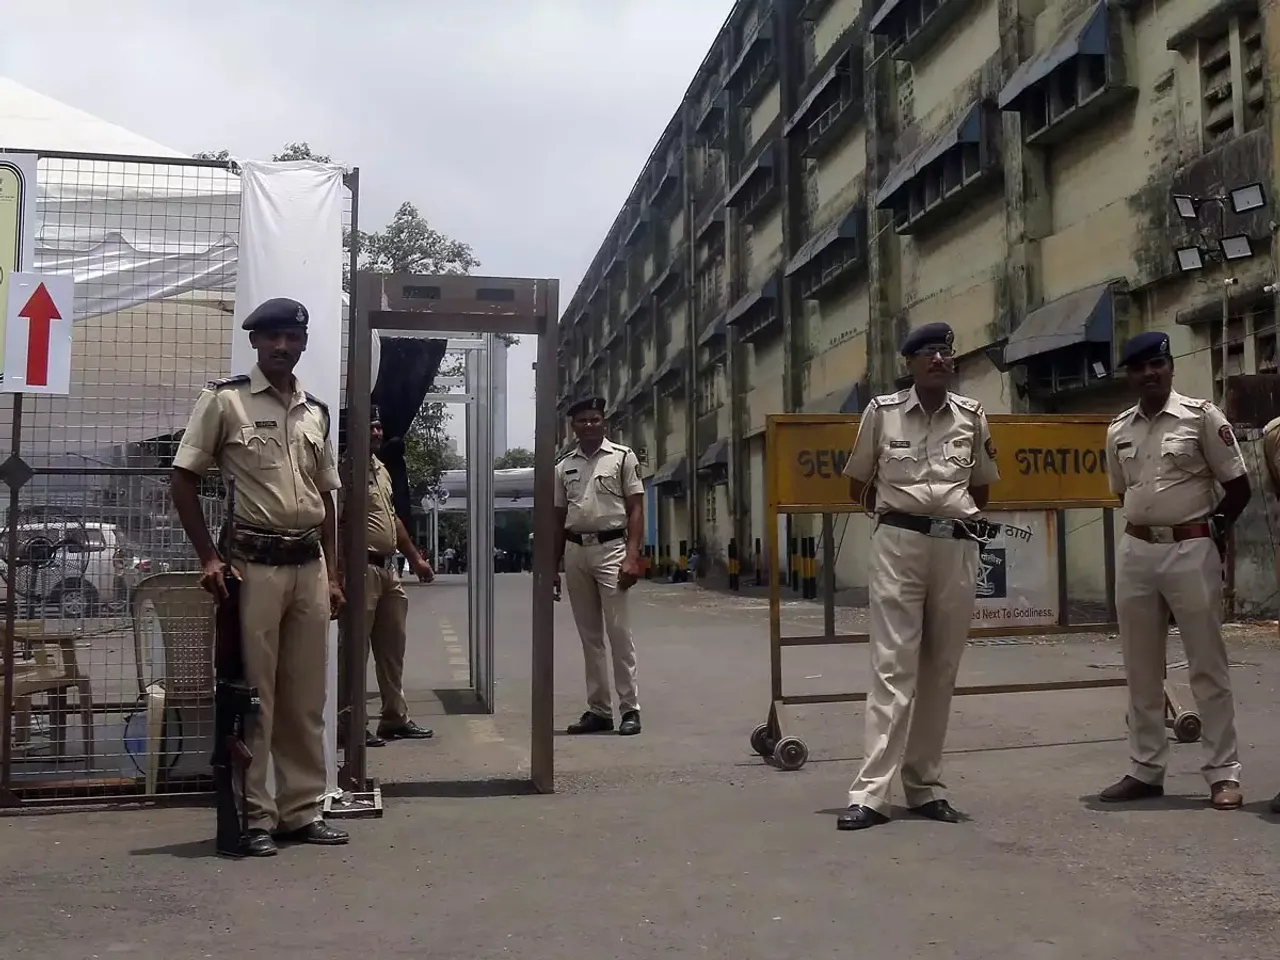 Haryana violence: Elaborate security arrangements made at sensitive places, says Delhi Police